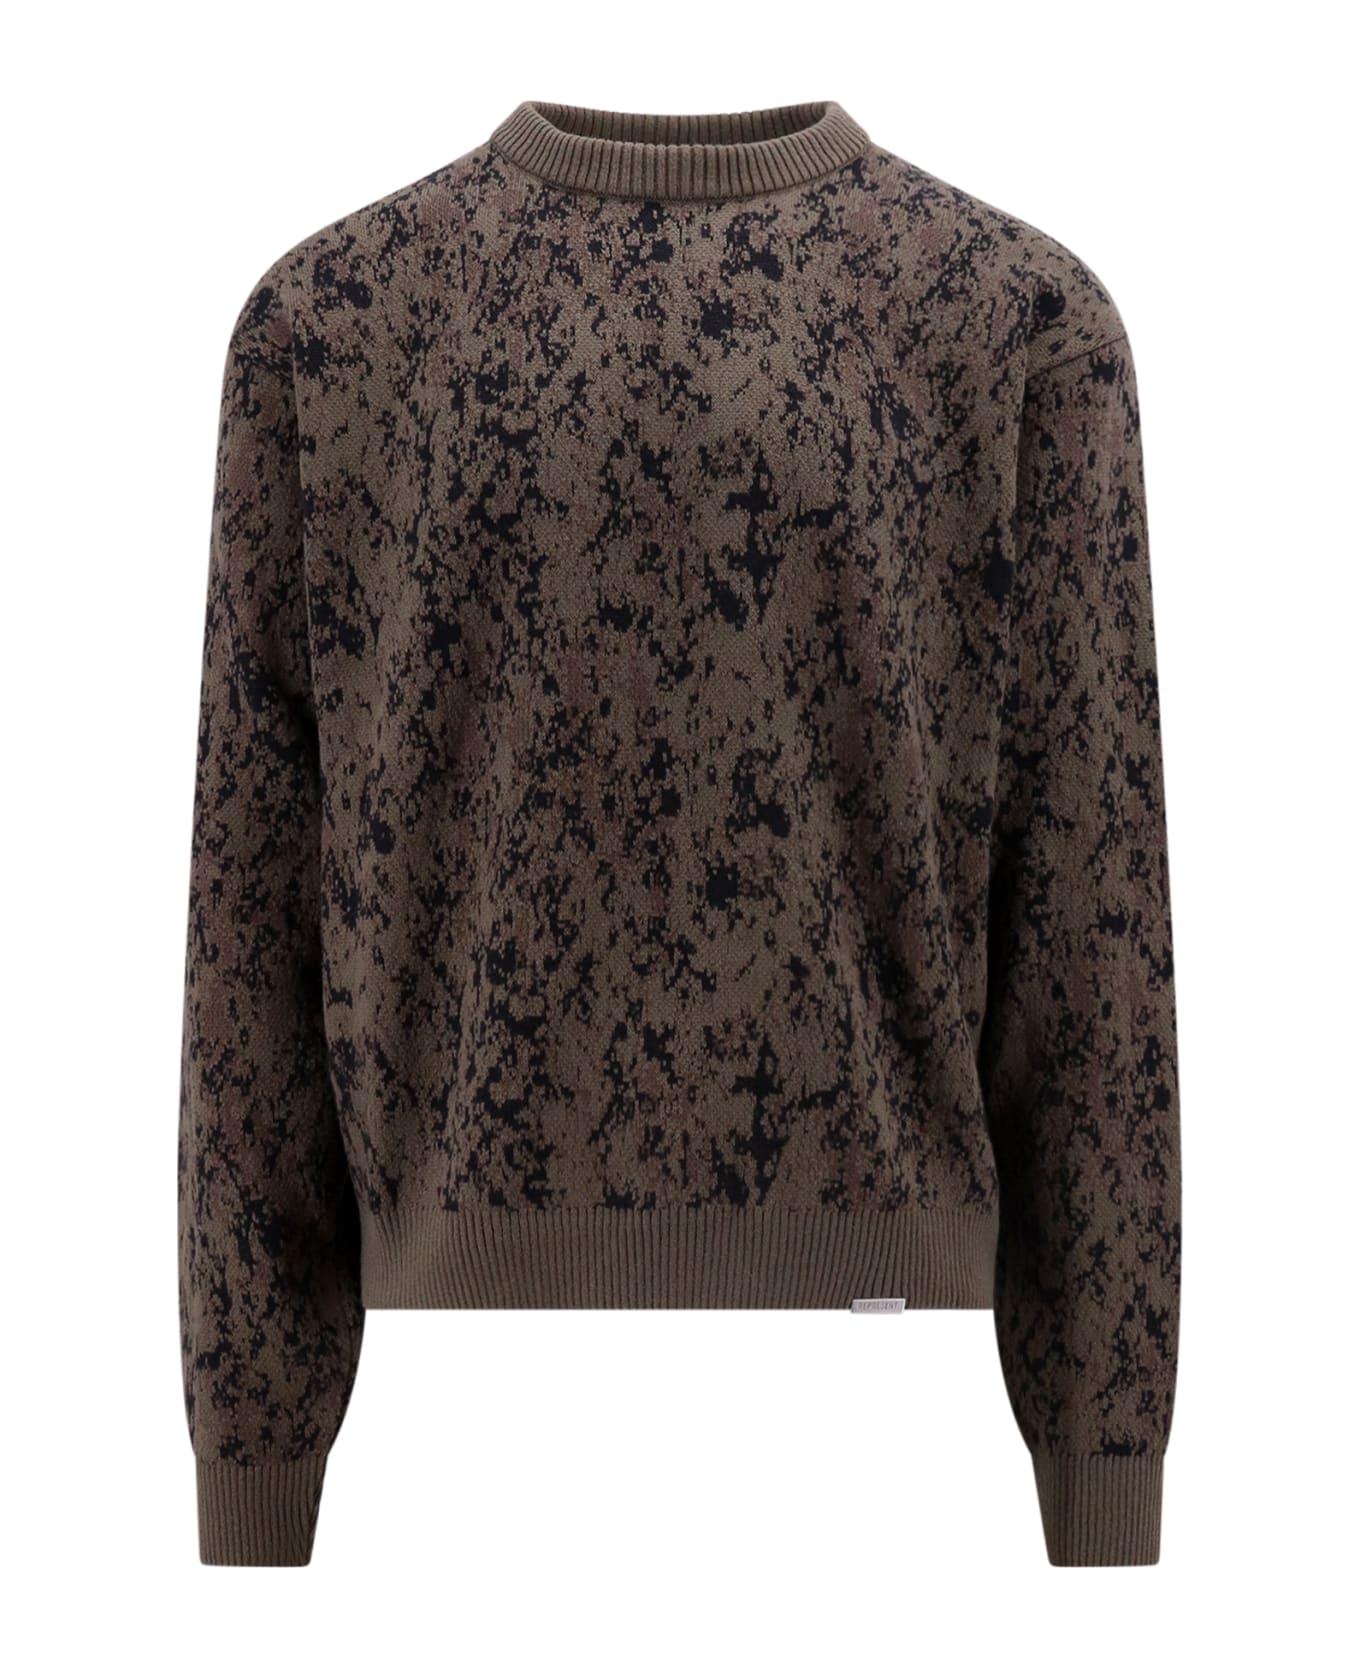 REPRESENT Sweater Sweater - CAMO